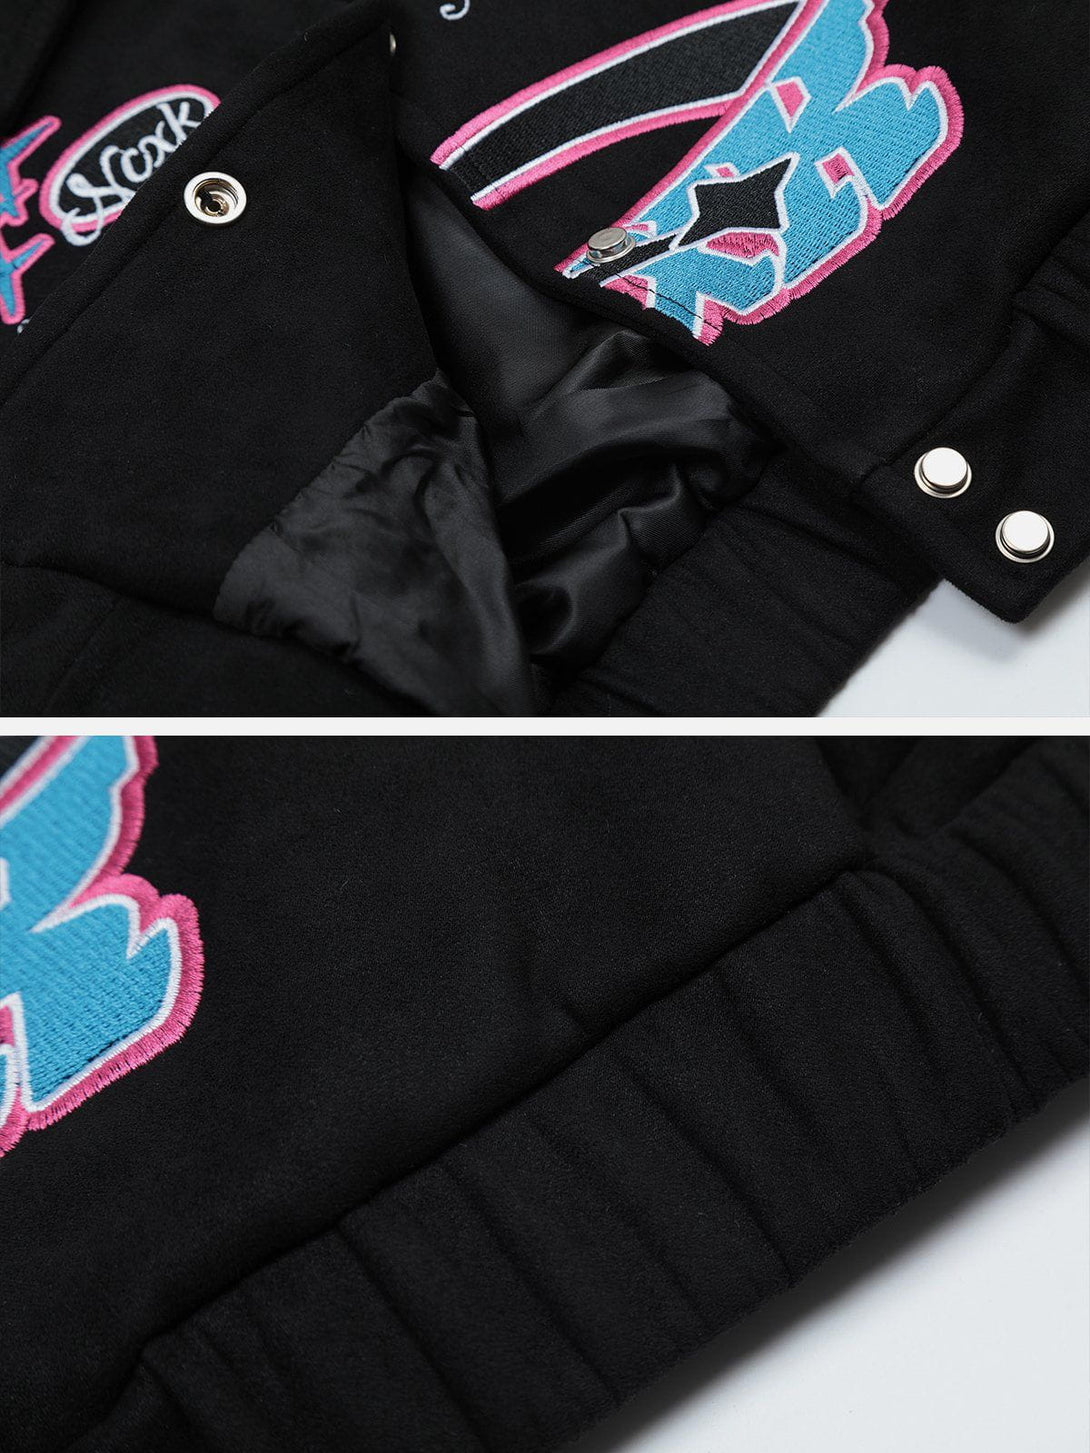 Majesda® - Embroidered Letter Racing Jacket outfit ideas, streetwear fashion - majesda.com